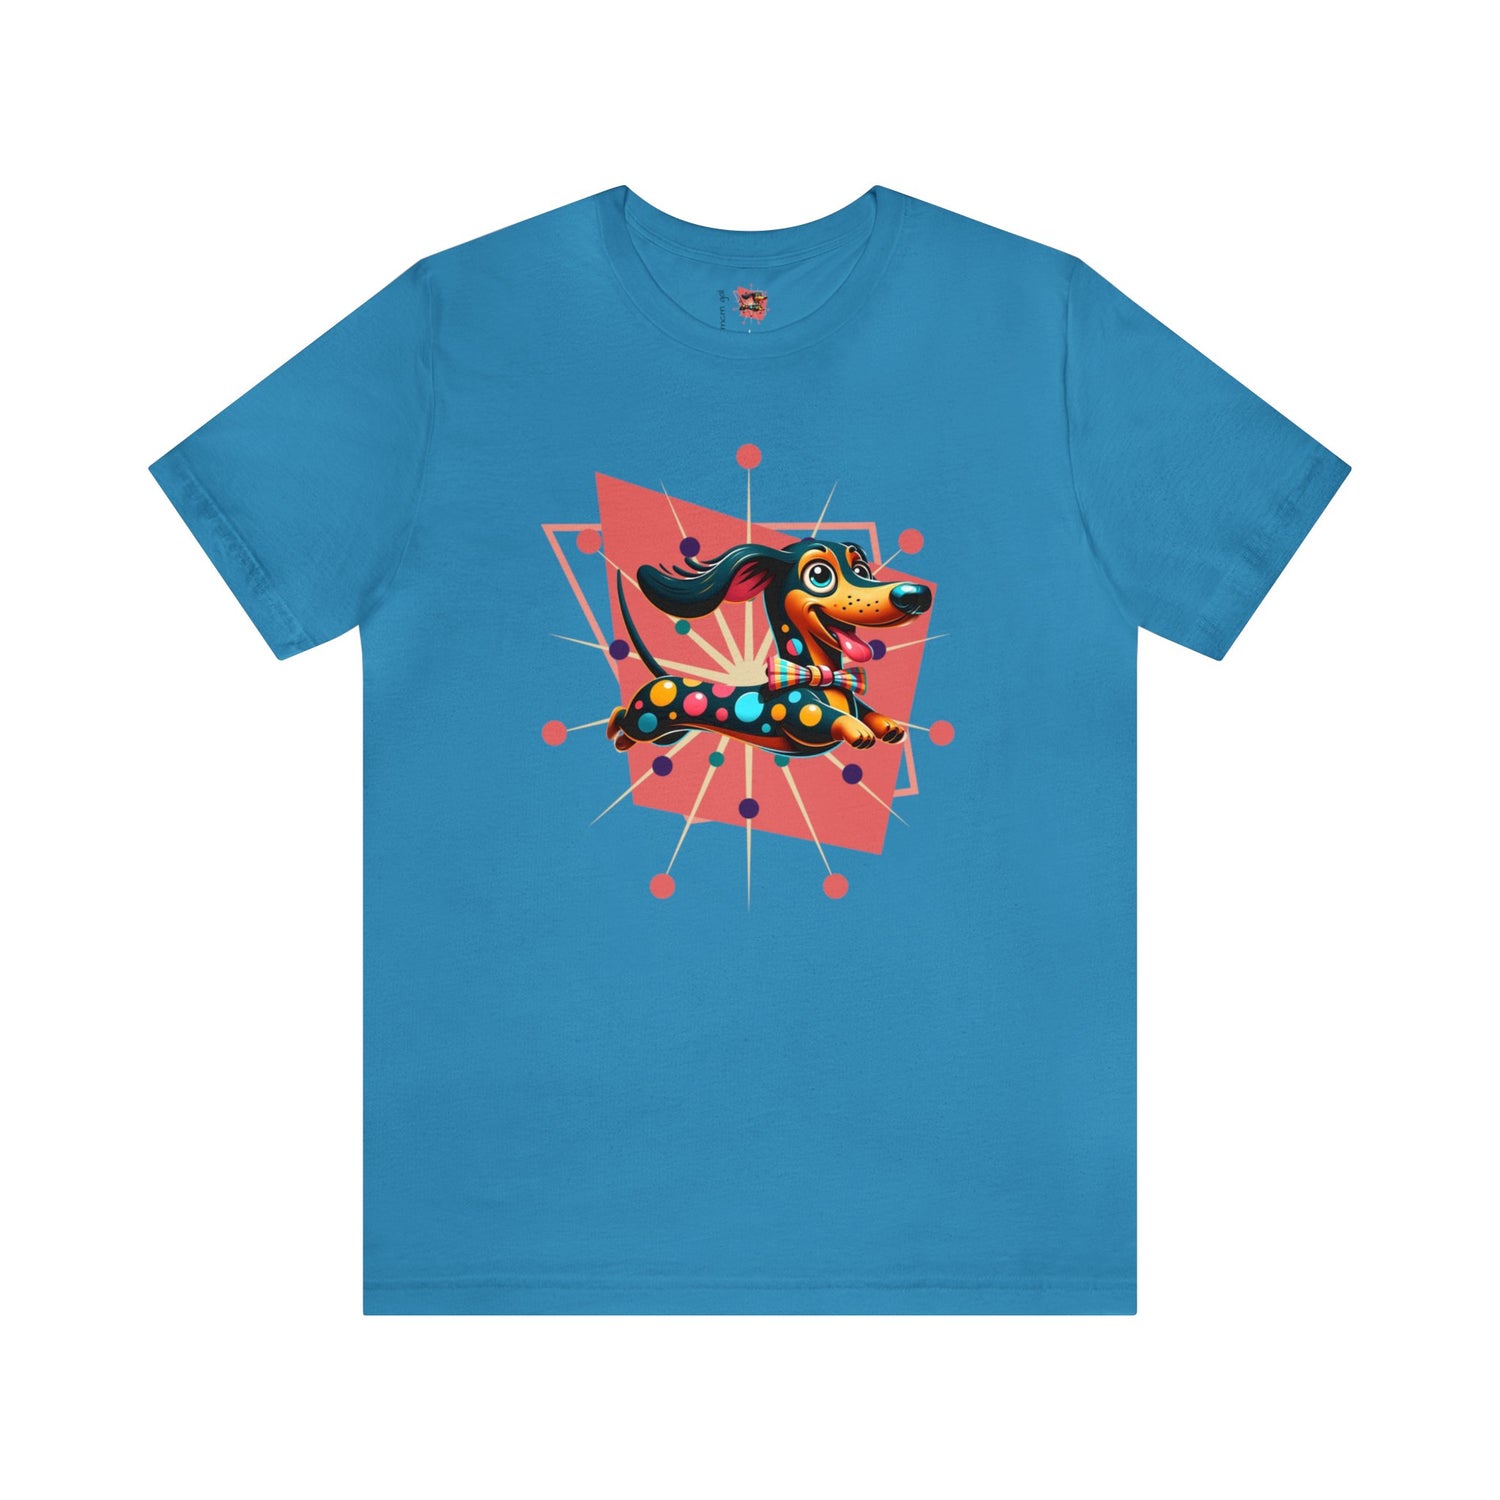 Dachsund Lover Comfy T-Shirt, Doxie Mom, Weiner Dog, Mid Century Mod Retro Designed For Cool Weiner Dog Mom